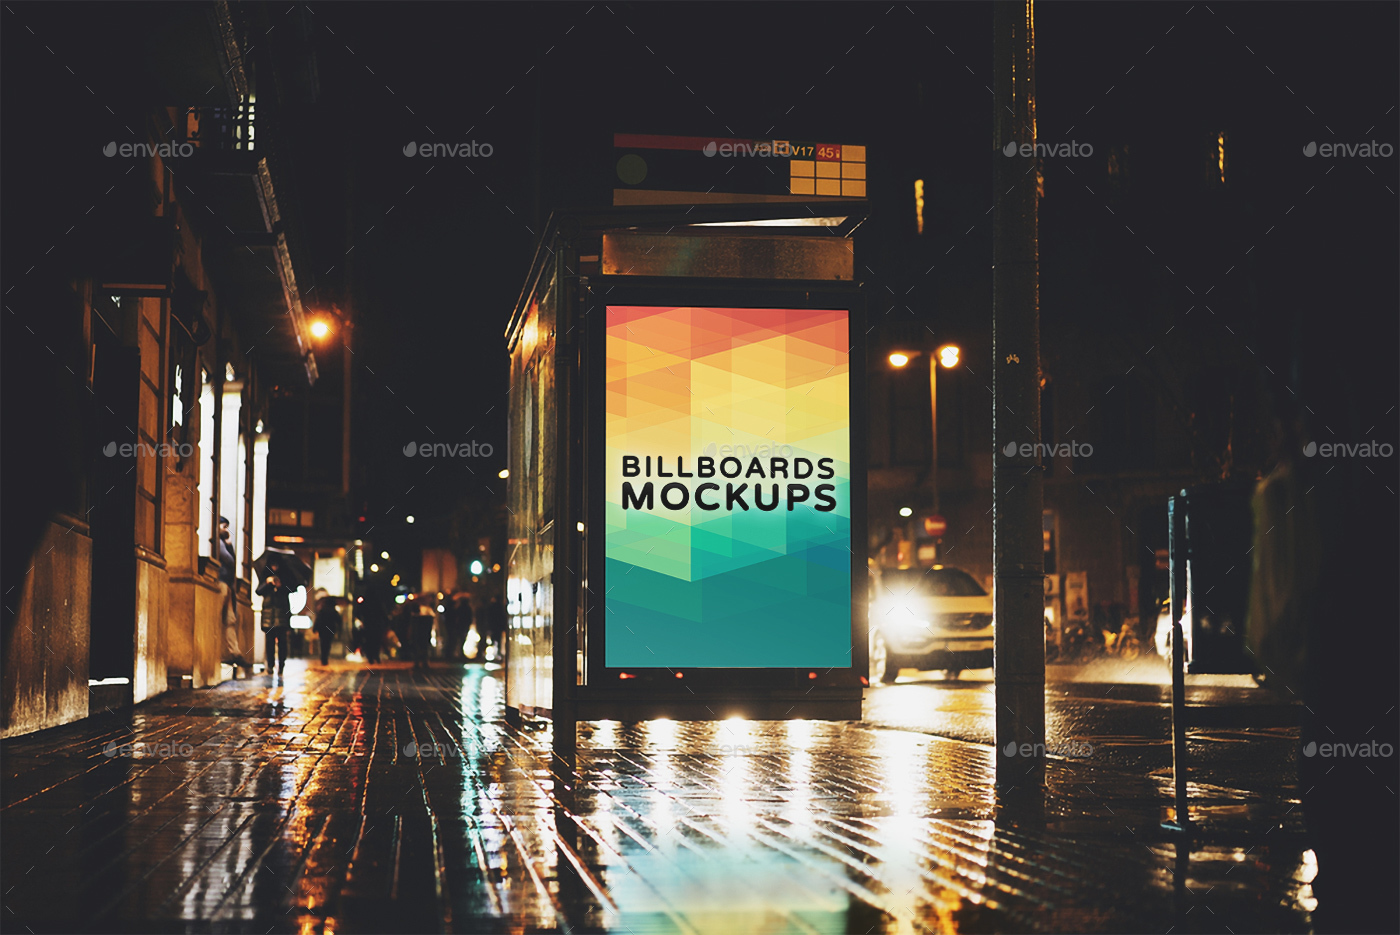 夜间广告牌展示样机模版 Billboards Mockups at Night Vol.2插图(11)